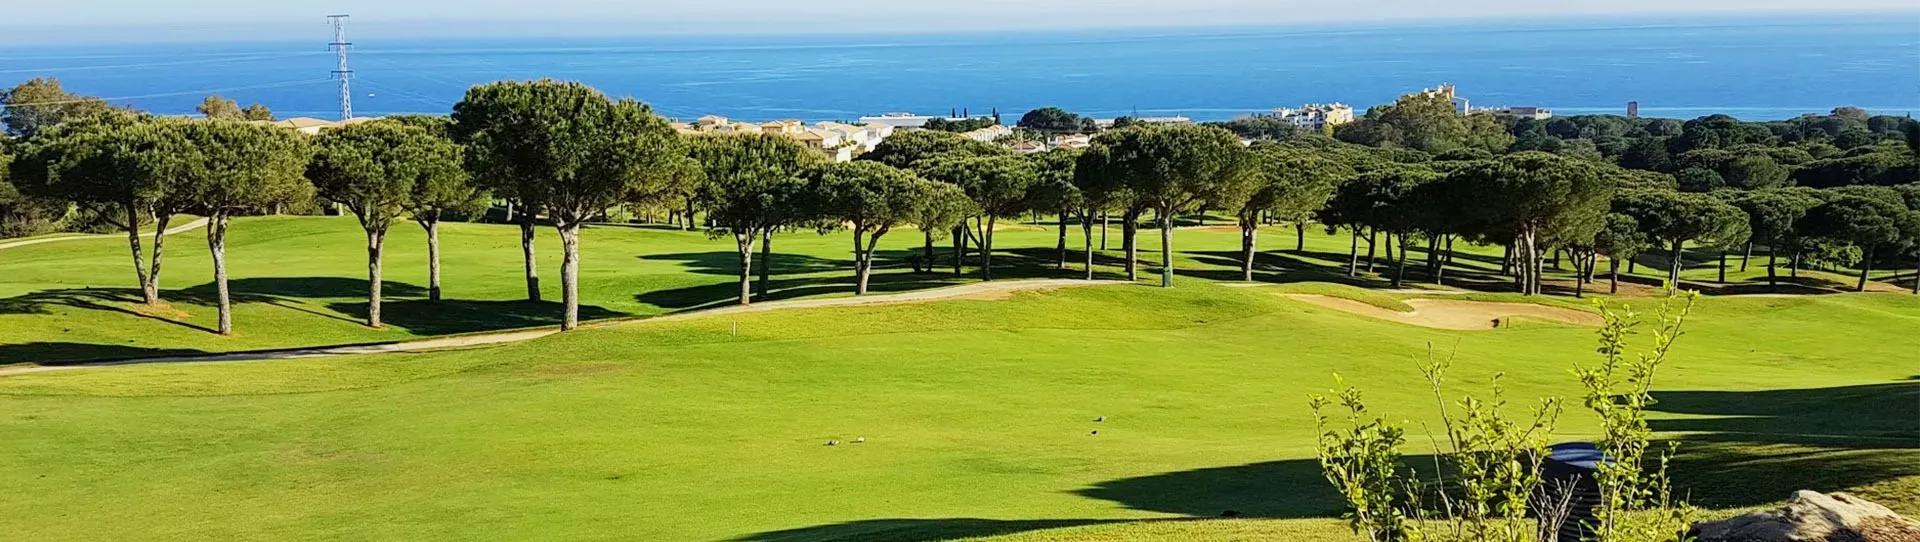 Spain golf courses - Cabopino Golf Club - Photo 2